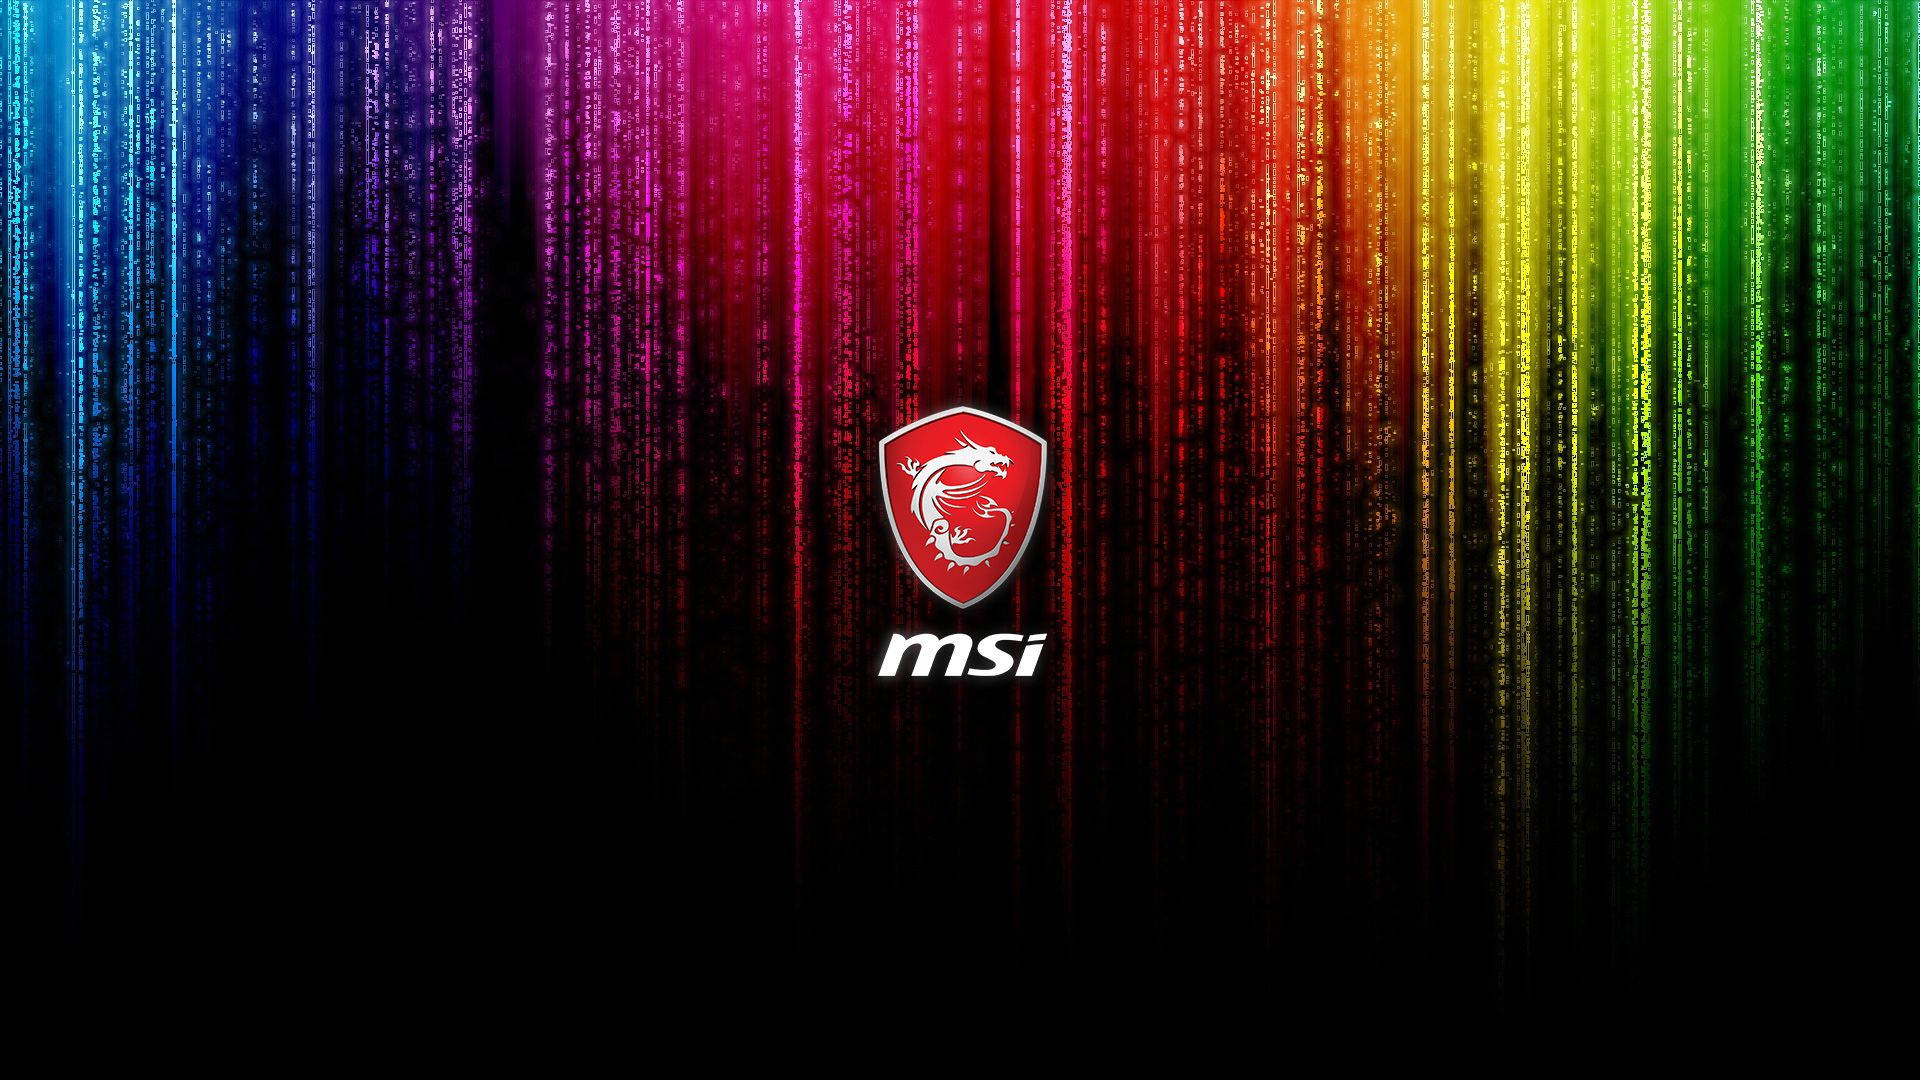 Msi Logo On Rainbow Spectrum Background